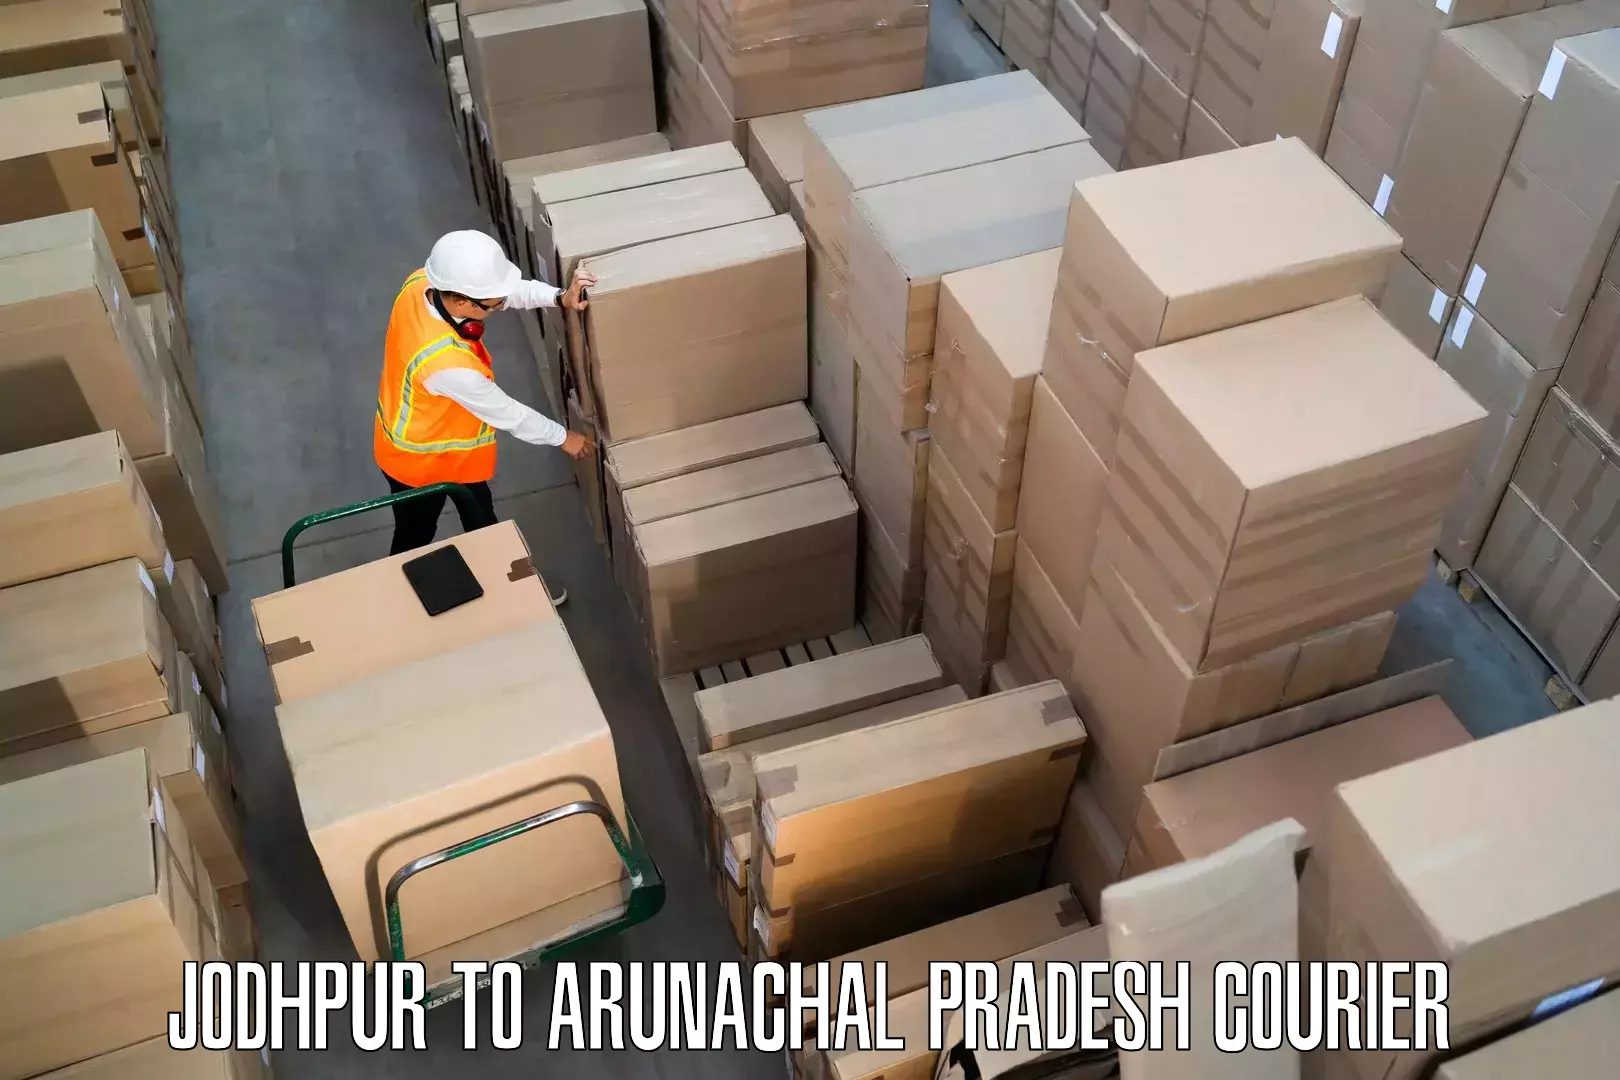 Furniture delivery service Jodhpur to Deomali